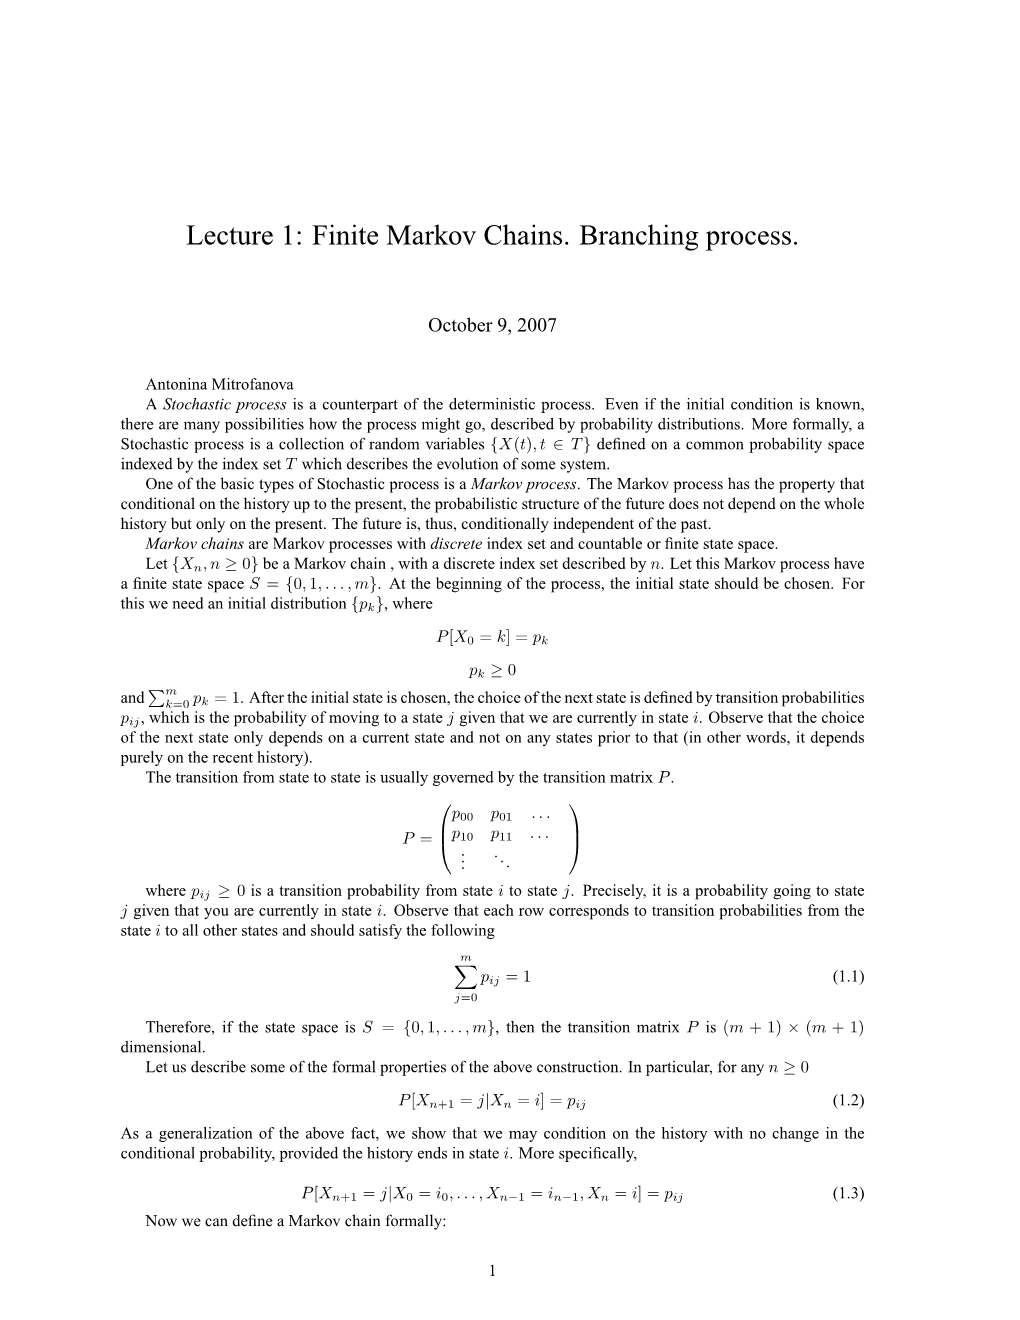 Lecture 1: Finite Markov Chains. Branching Process